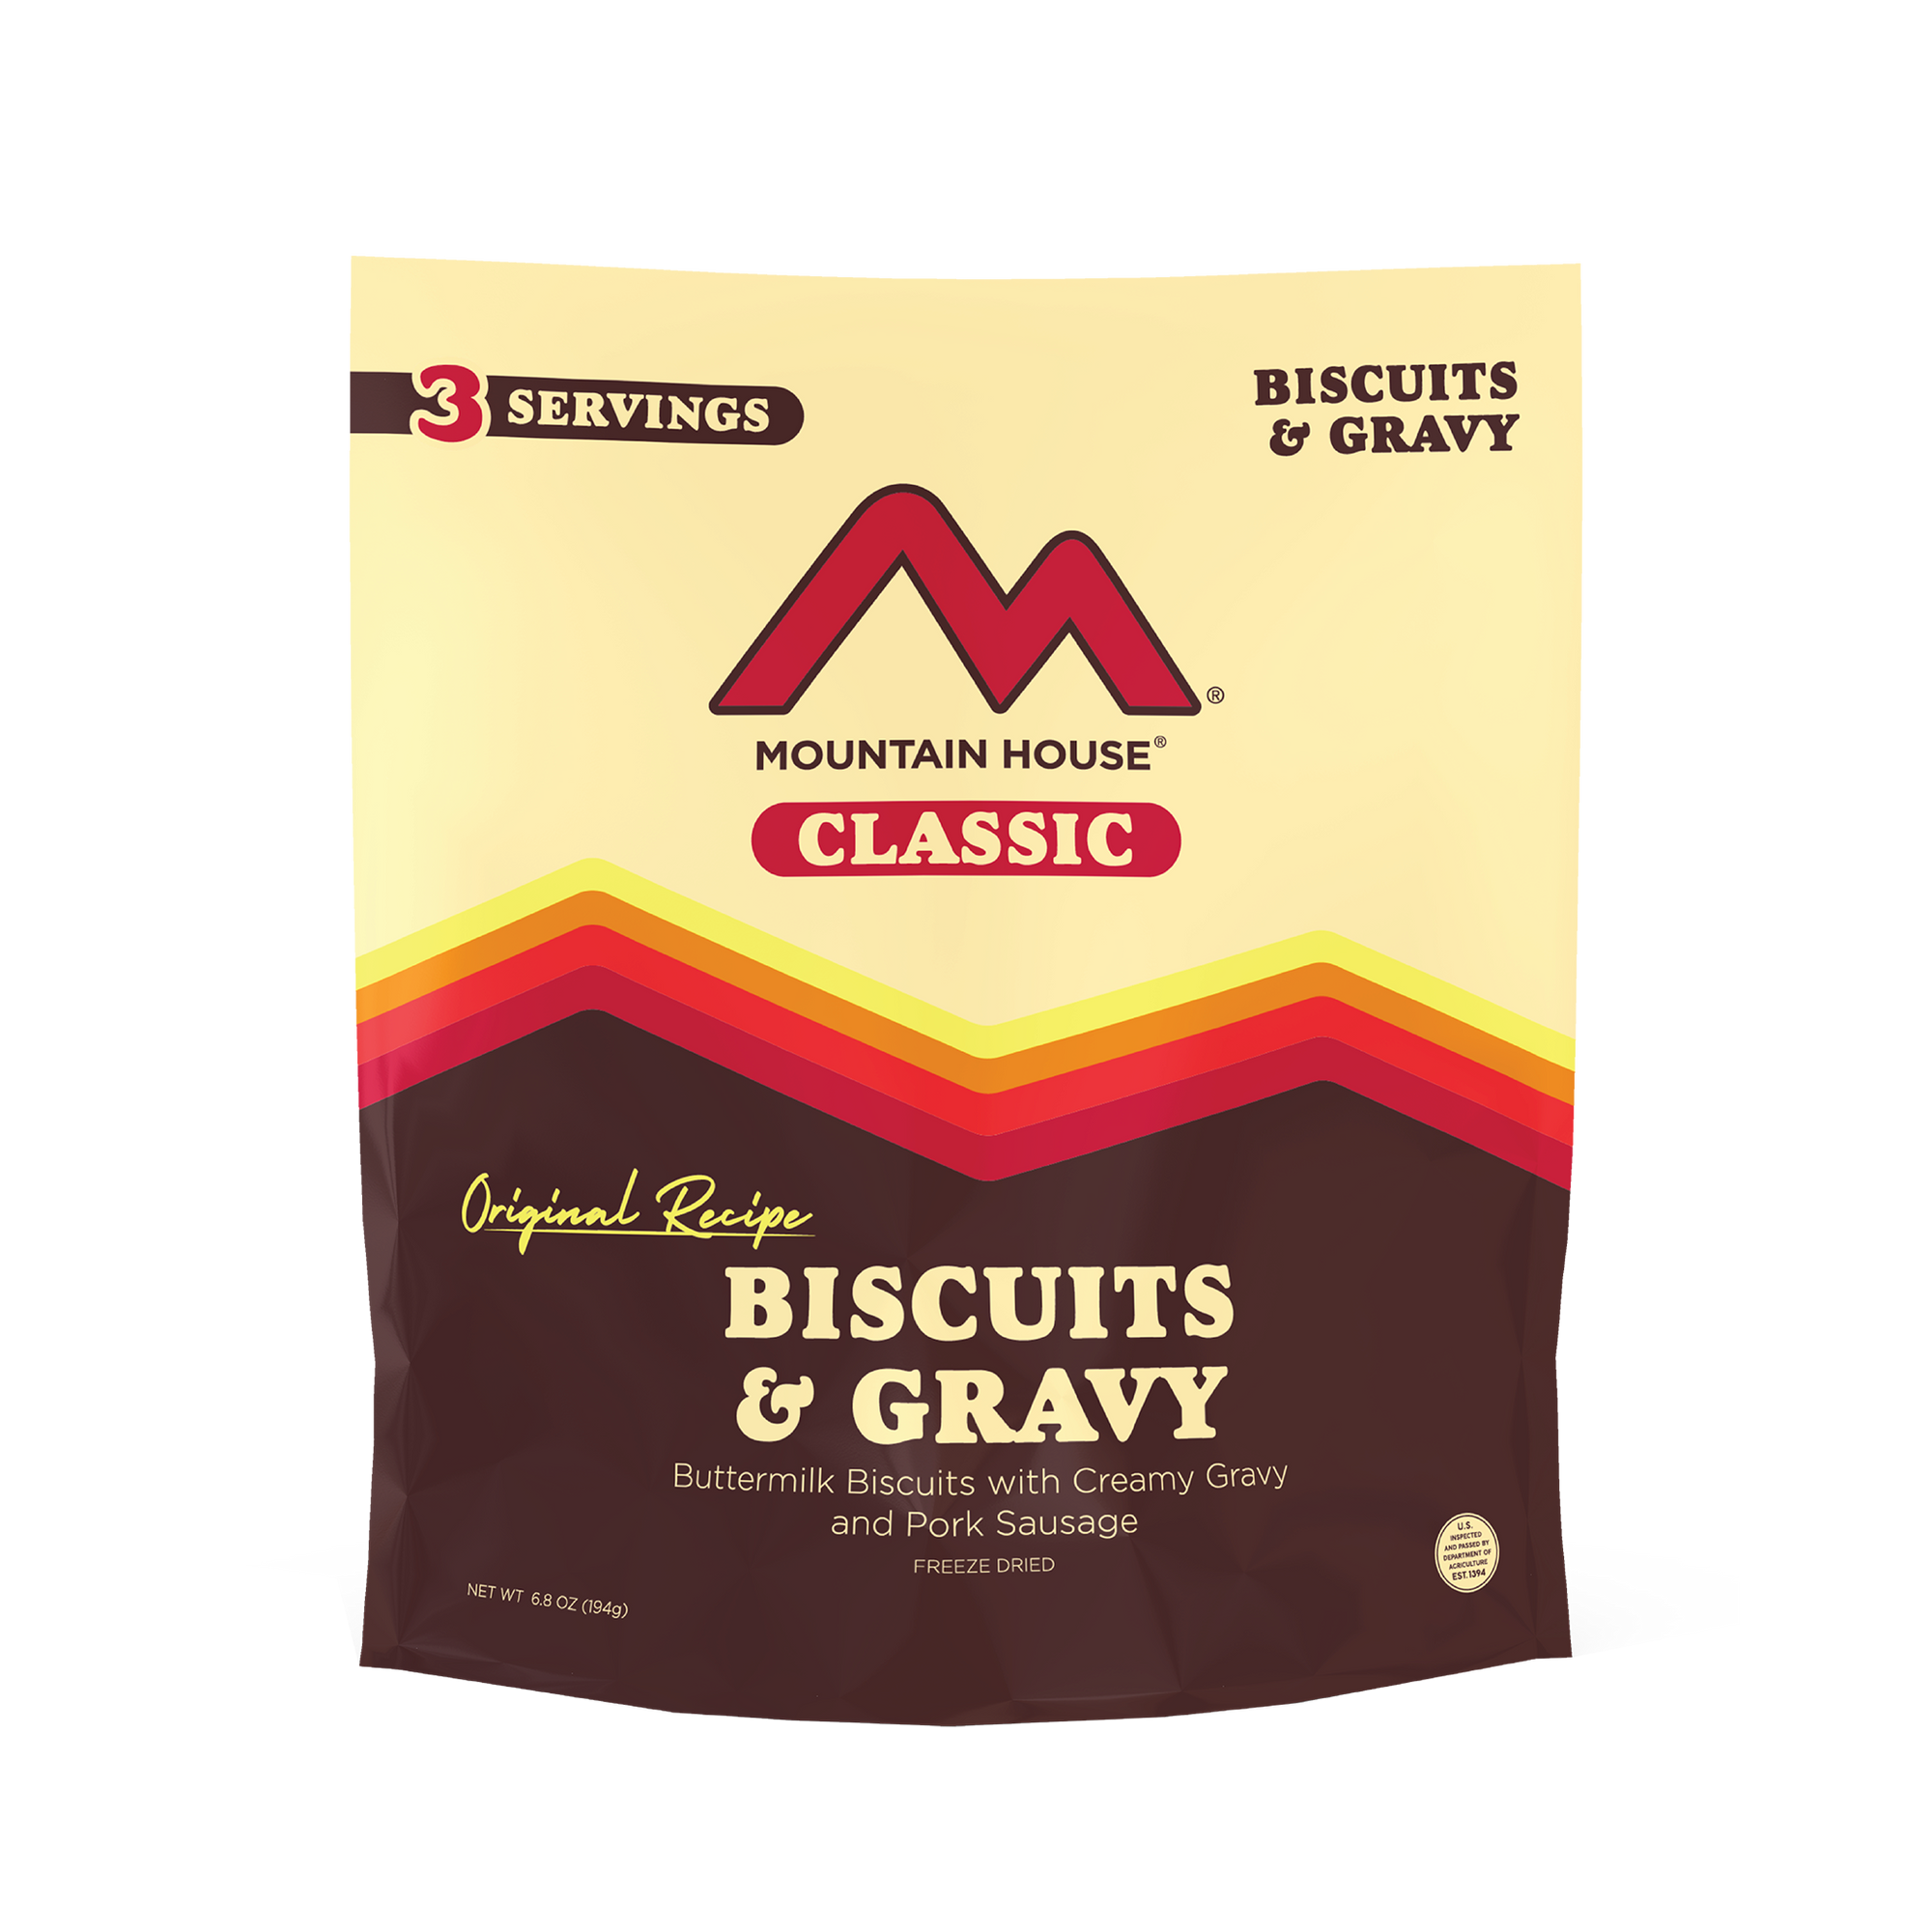 Classic Biscuits & Gravy